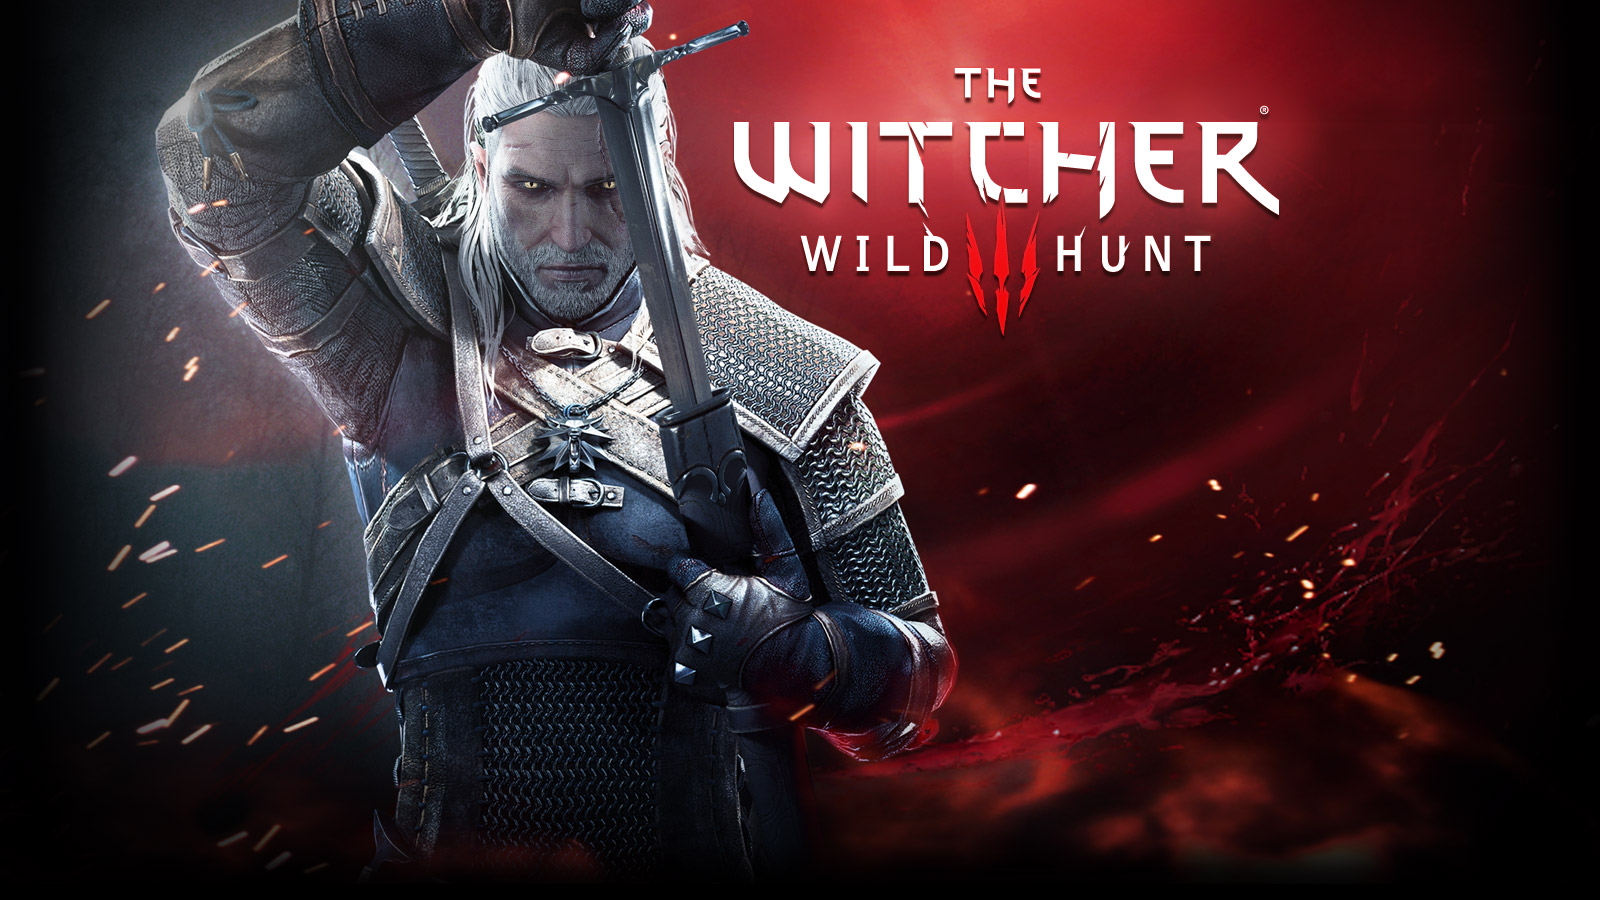 The Witcher 3: Wild Hunt dévoile sa sublime présentation. 71351161-ad9d-414d-af6a-a08880fcf7b3.jpg?n=witcher3_games_hero_1460x820_04